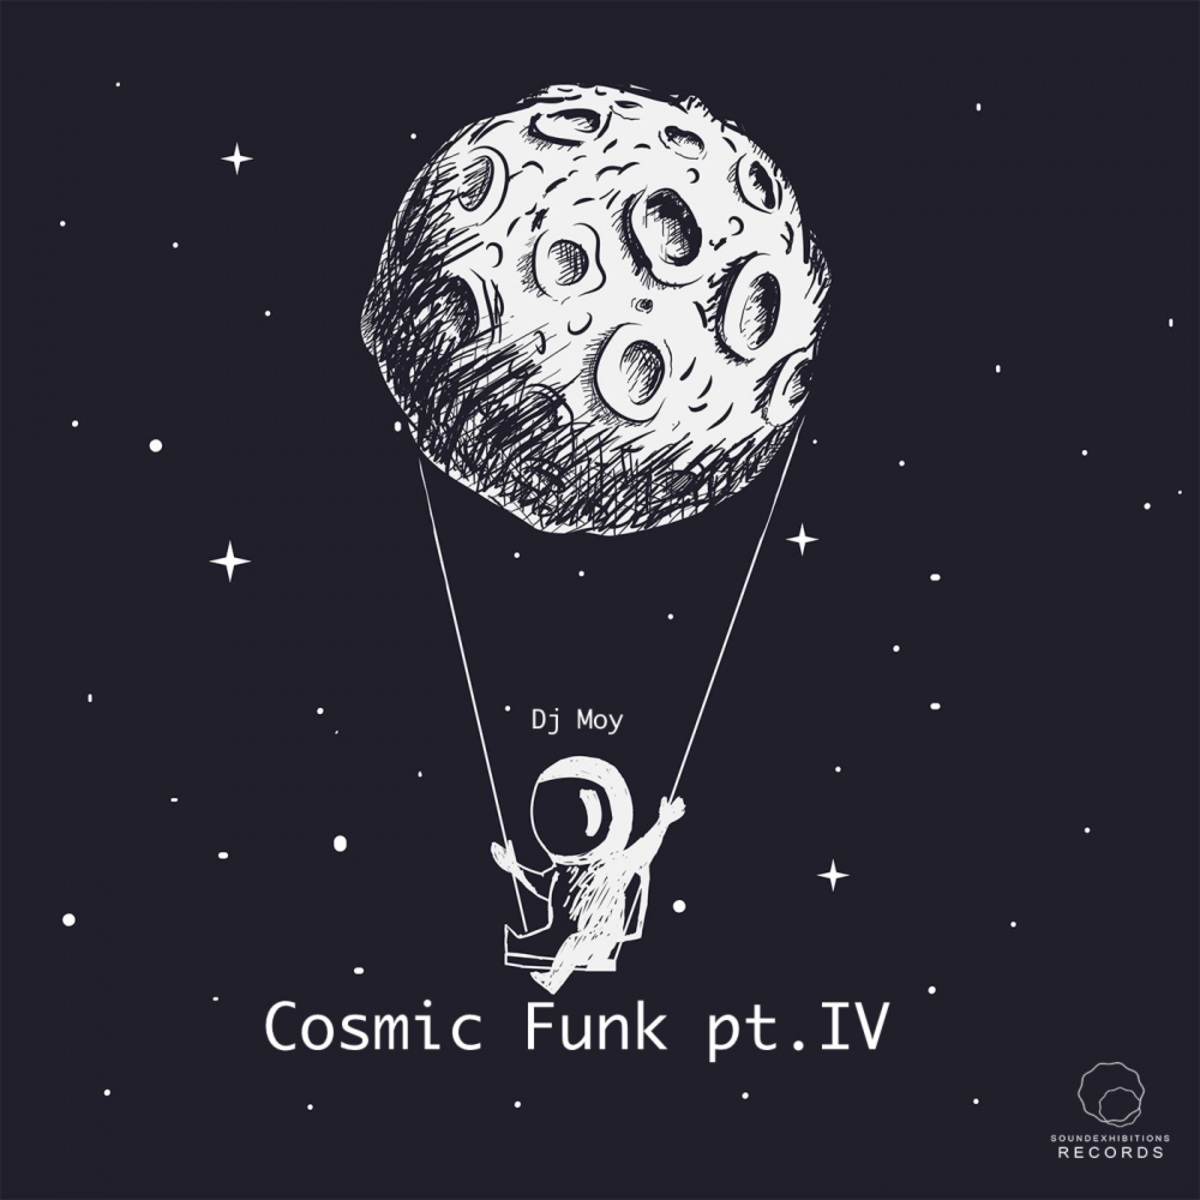 Dj Moy - Cosmic Funk, Pt. IV / Sound-Exhibitions-Records